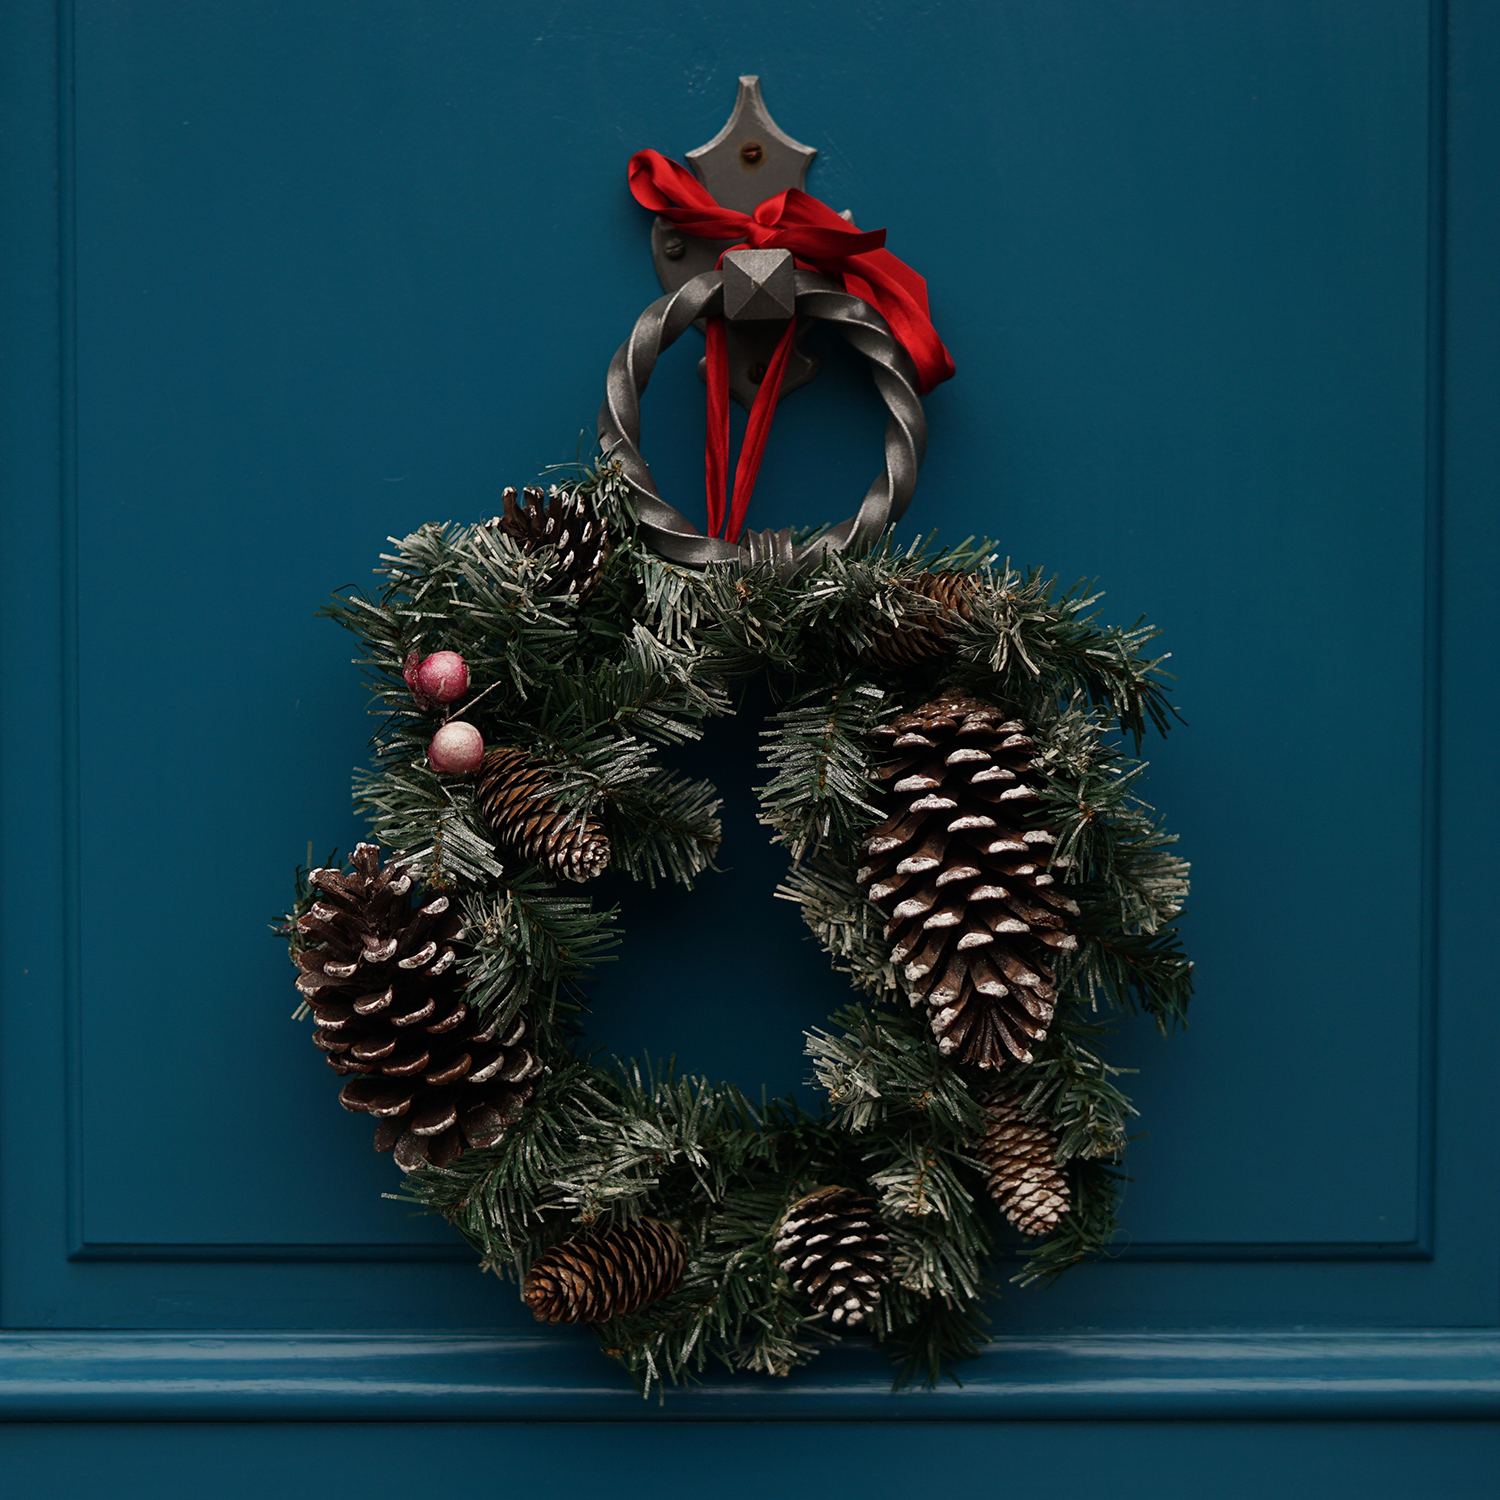 A holiday wreath on a blue door